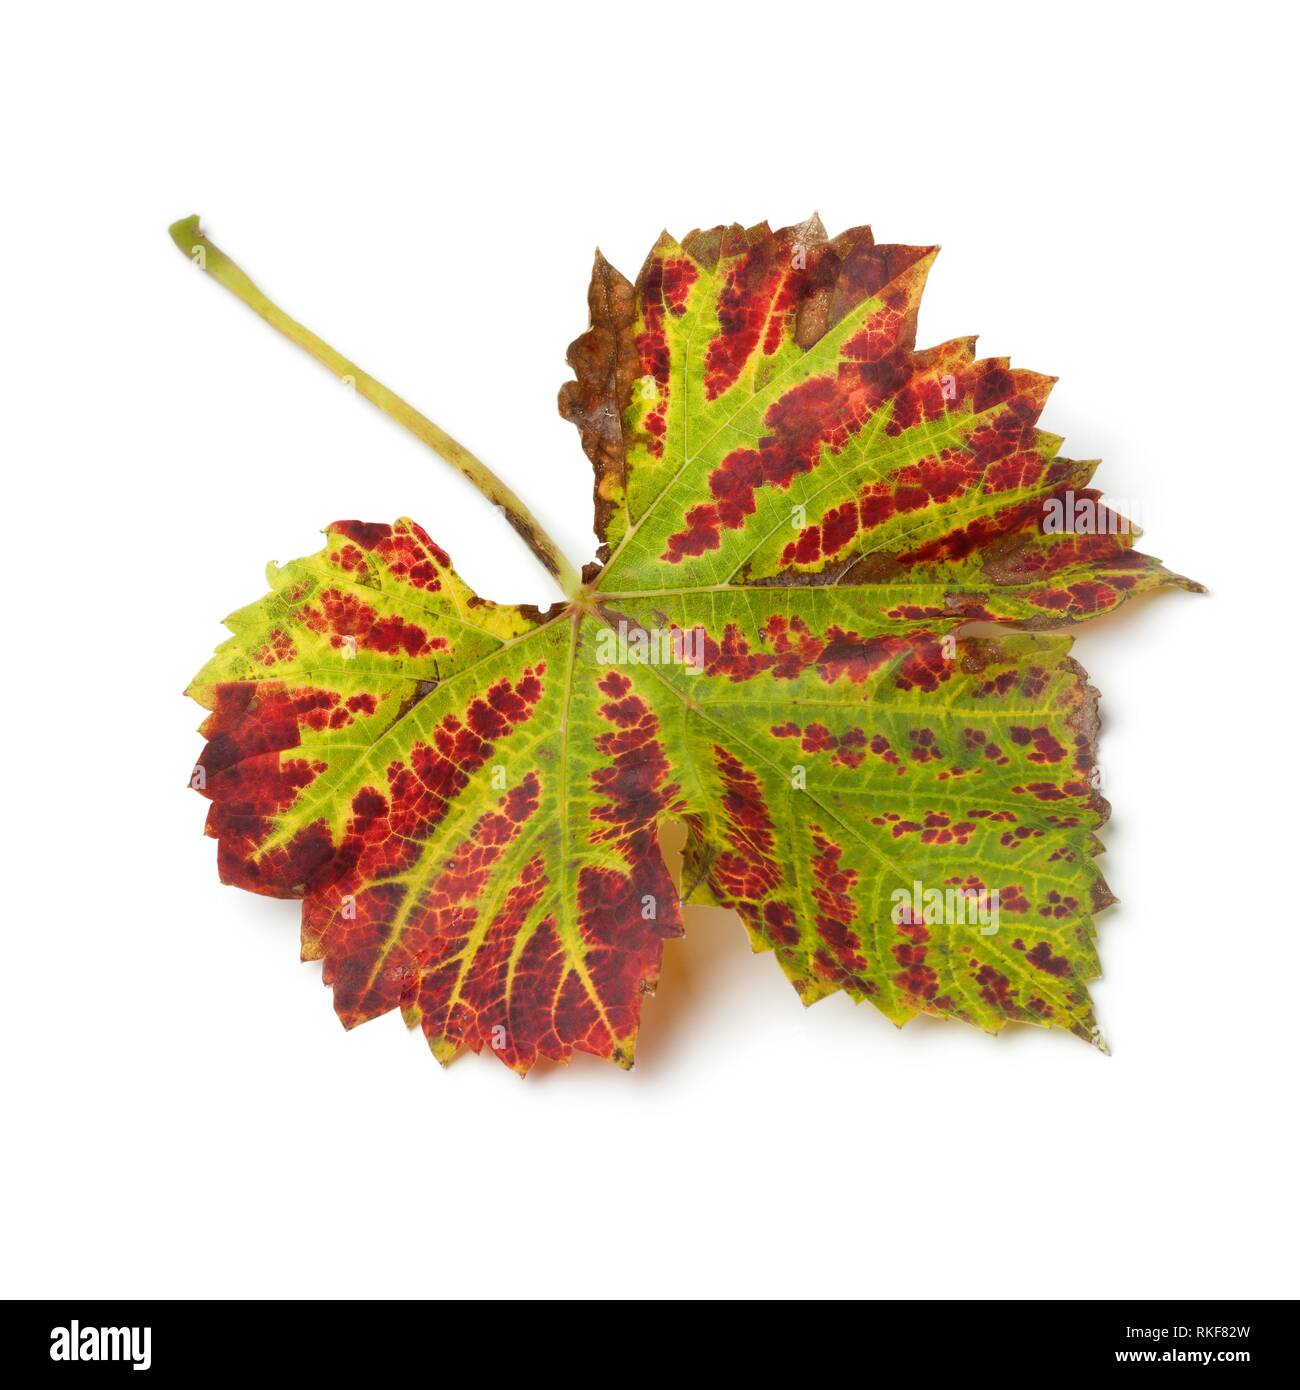 Autumn leaf of a grape plant on white background. Stock Photo